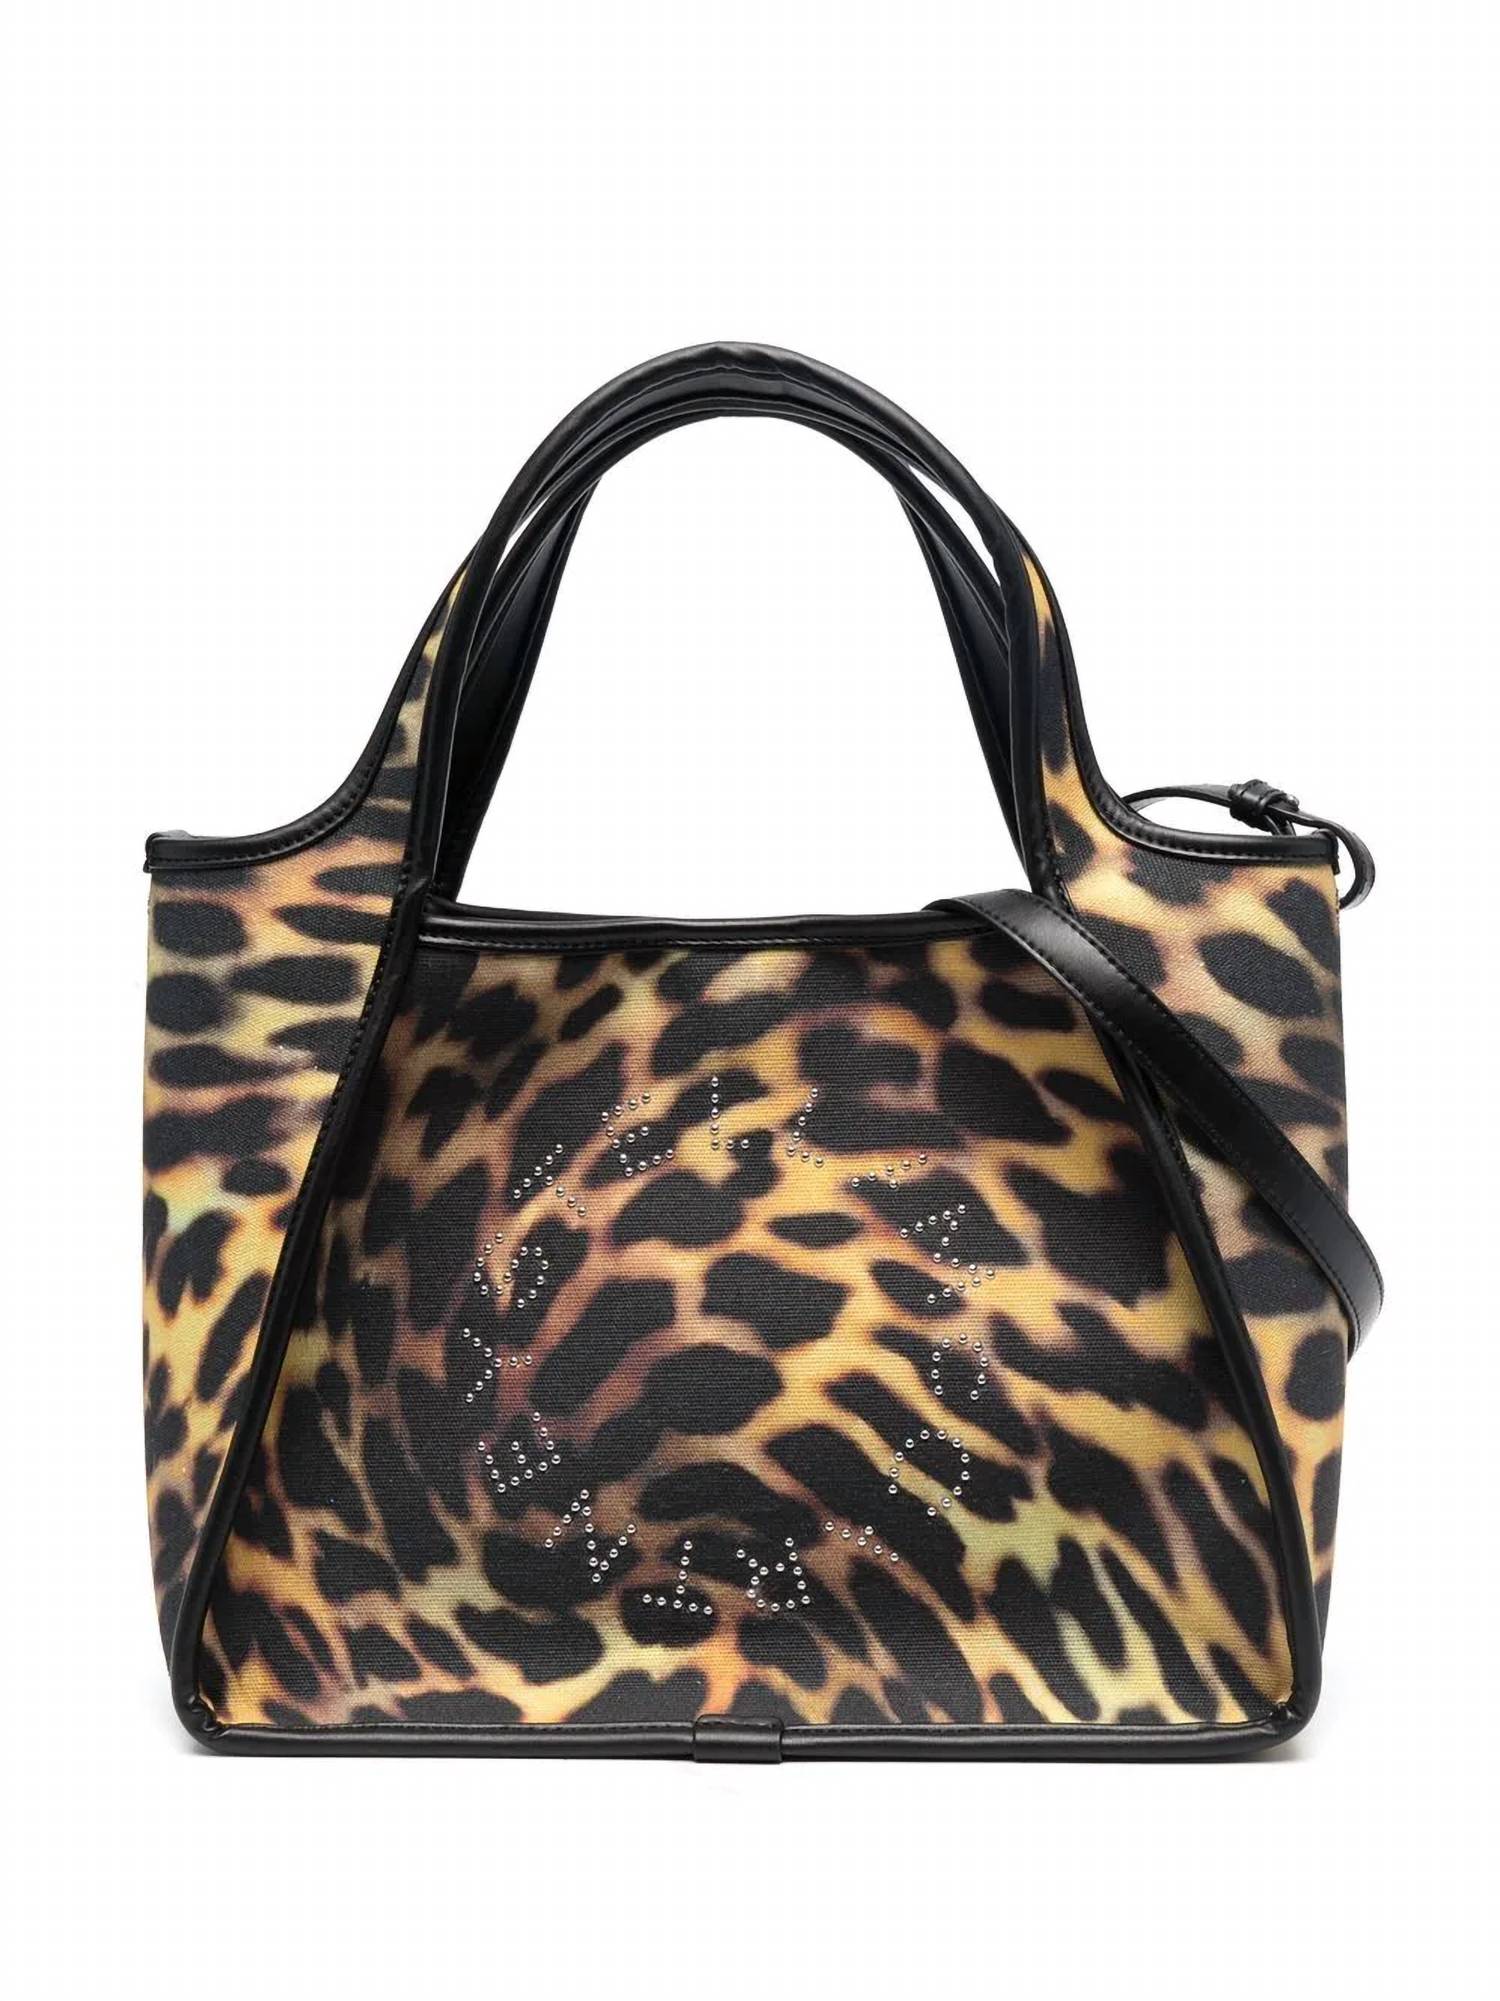 STELLA MCCARTNEY Leopard-Print Studded Logo Tote Bag in Black